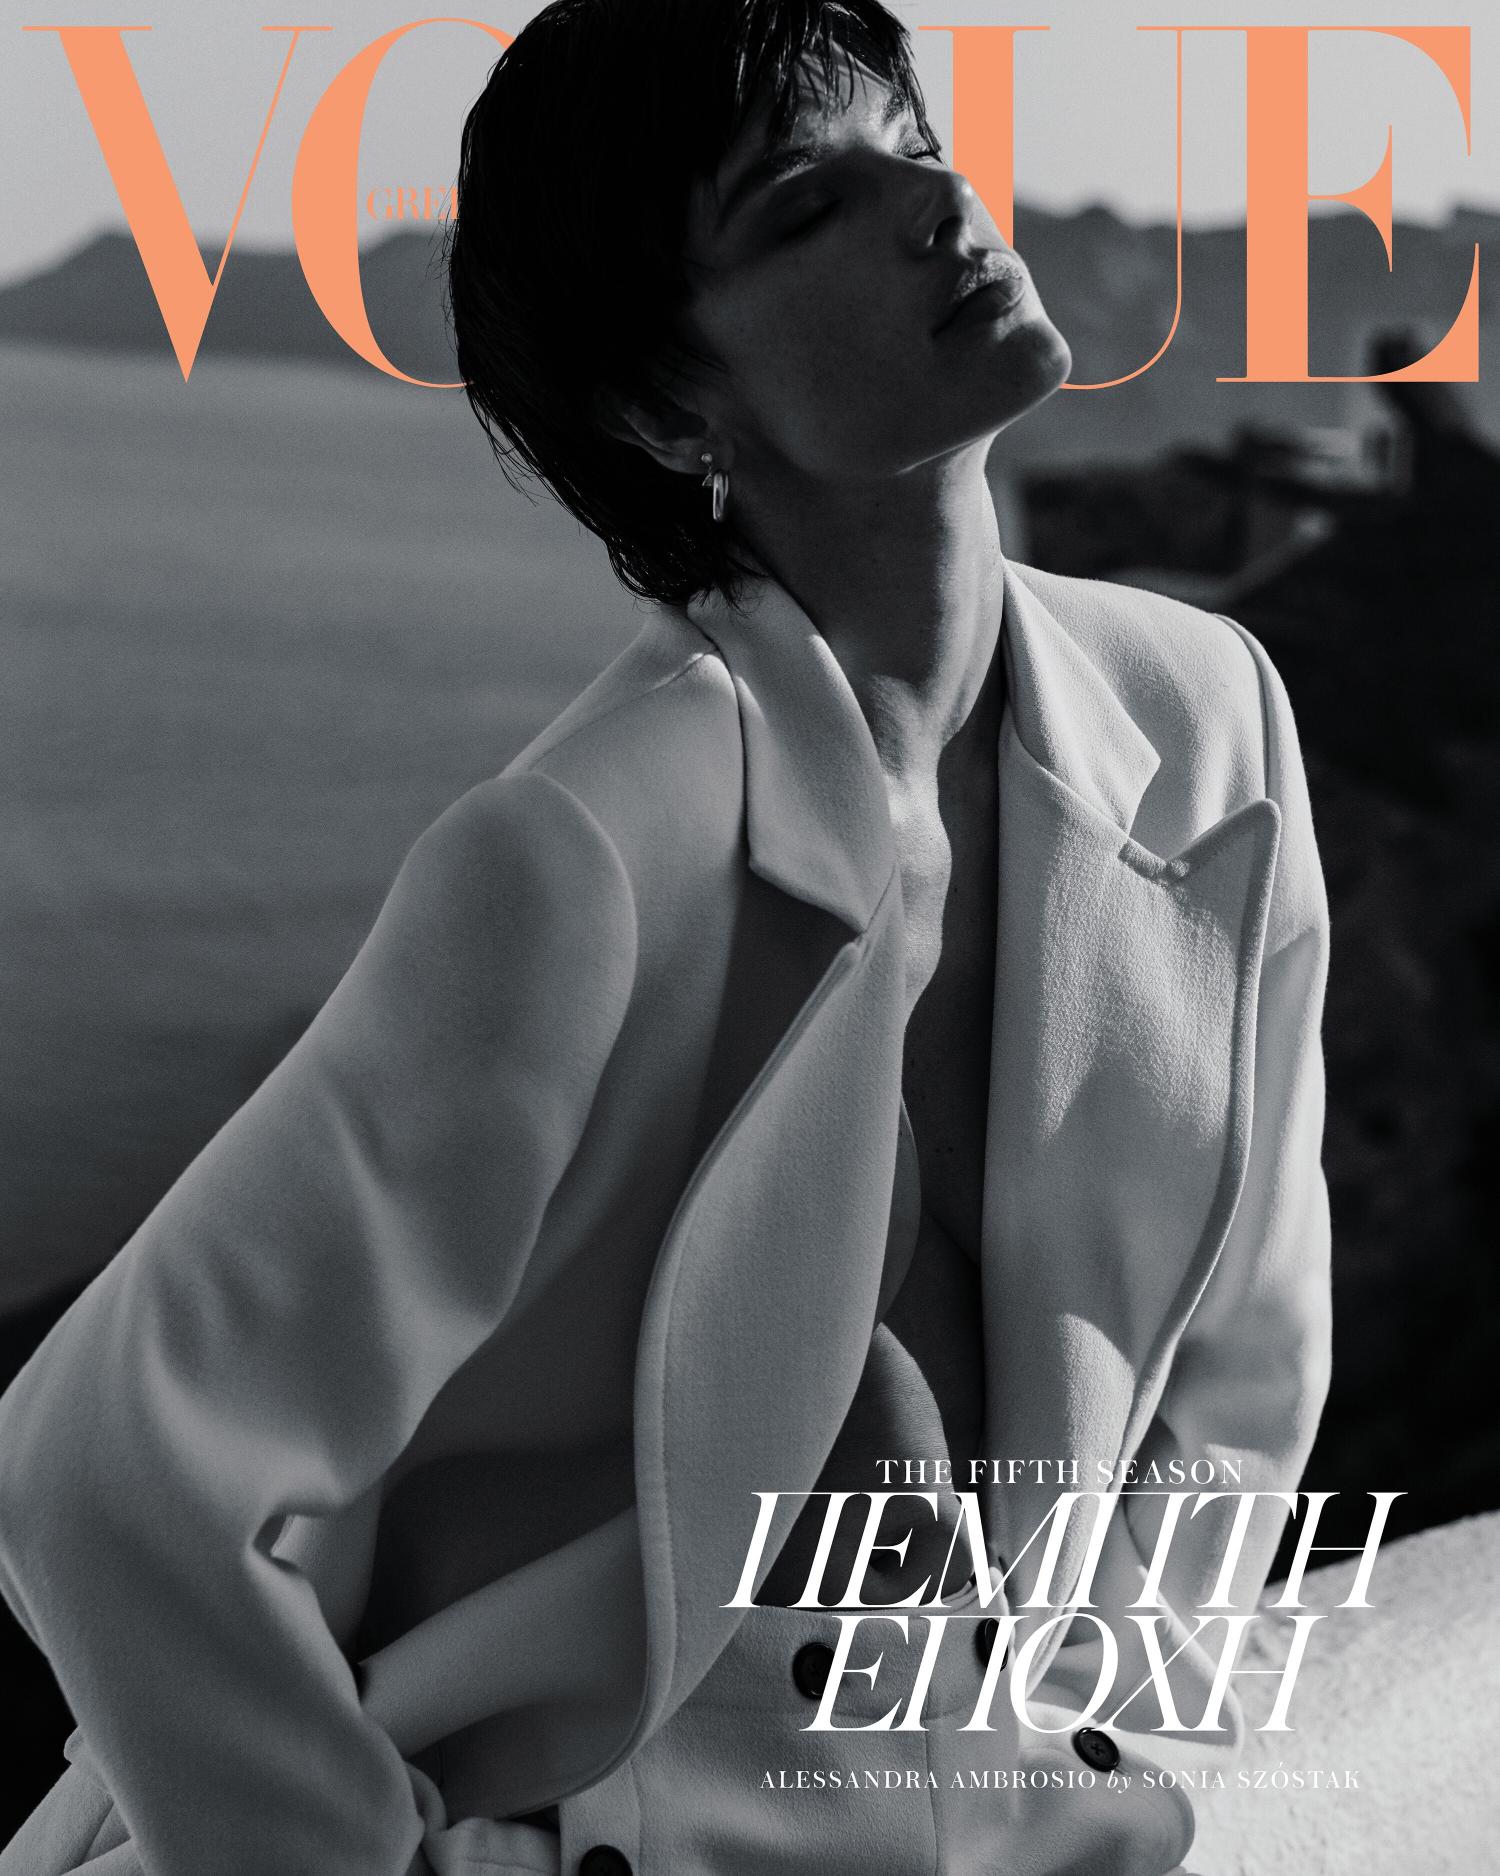 Alessandra Ambrosio Covers Vogue Greece September 2019 Back to 90s Linda Evangelista Tribute